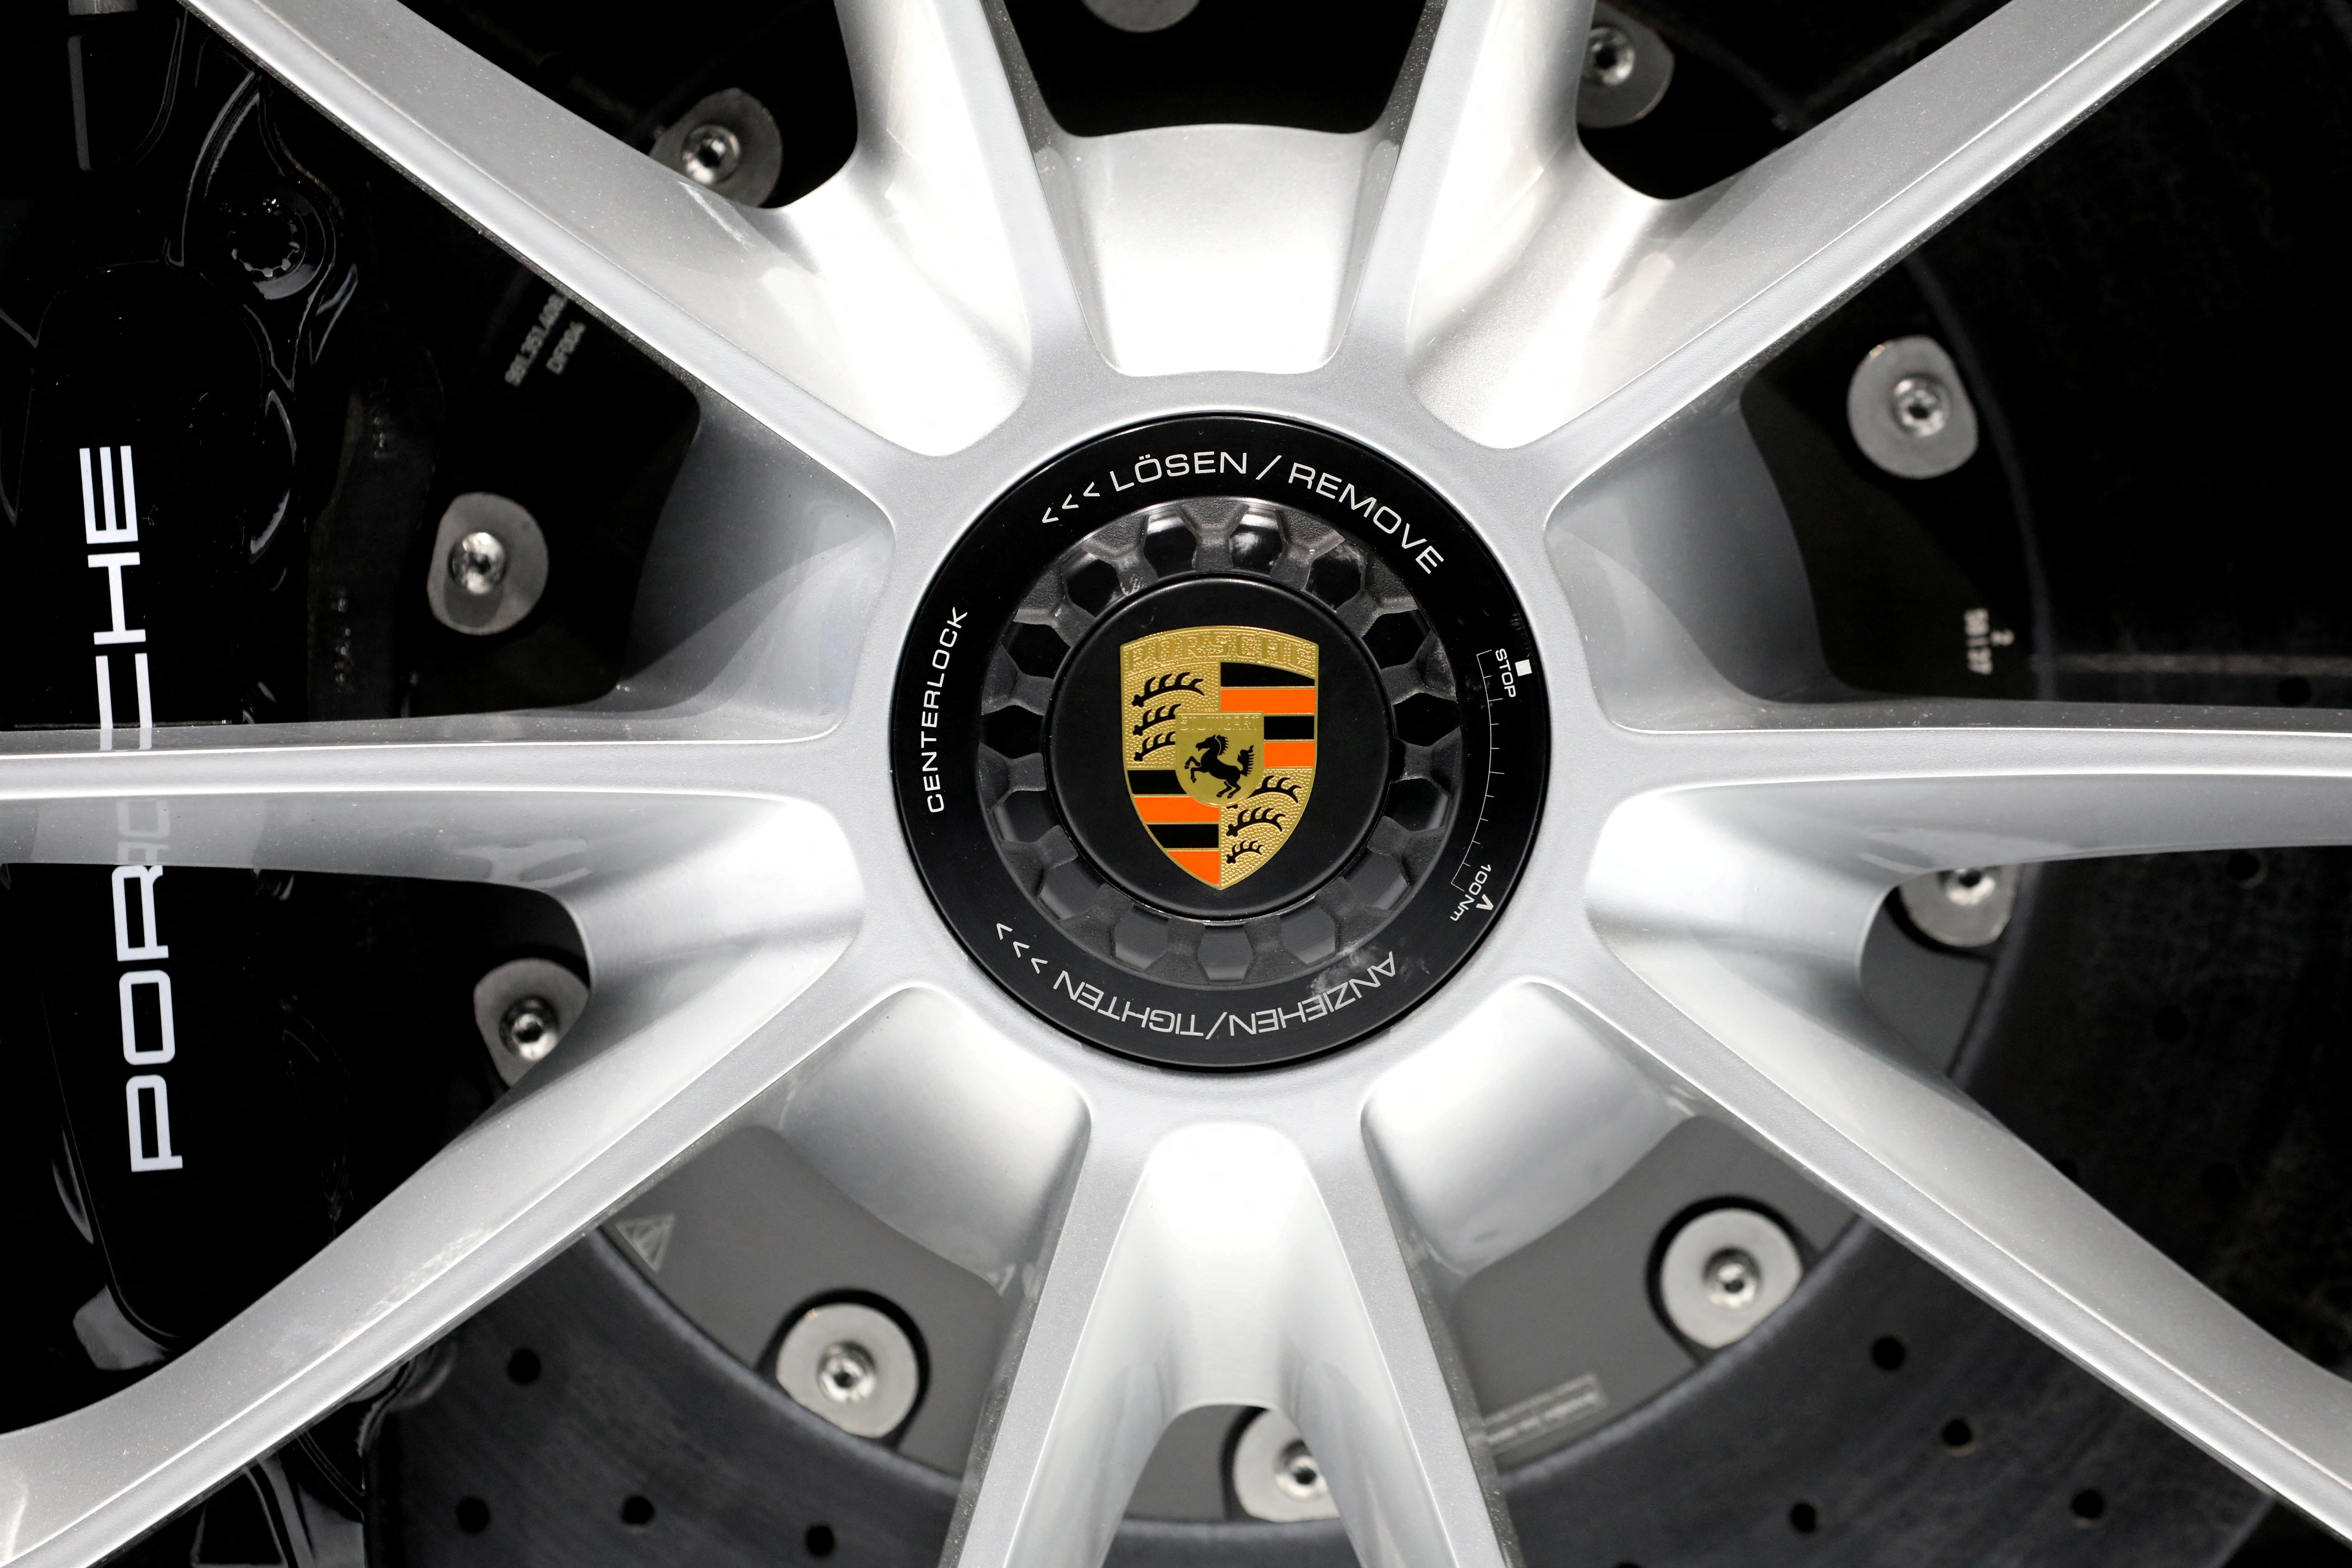 The Porsche logo seen on wheel as 2020 Porsche 911 Speedster is revealed at the 2019 New York International Auto Show in New York